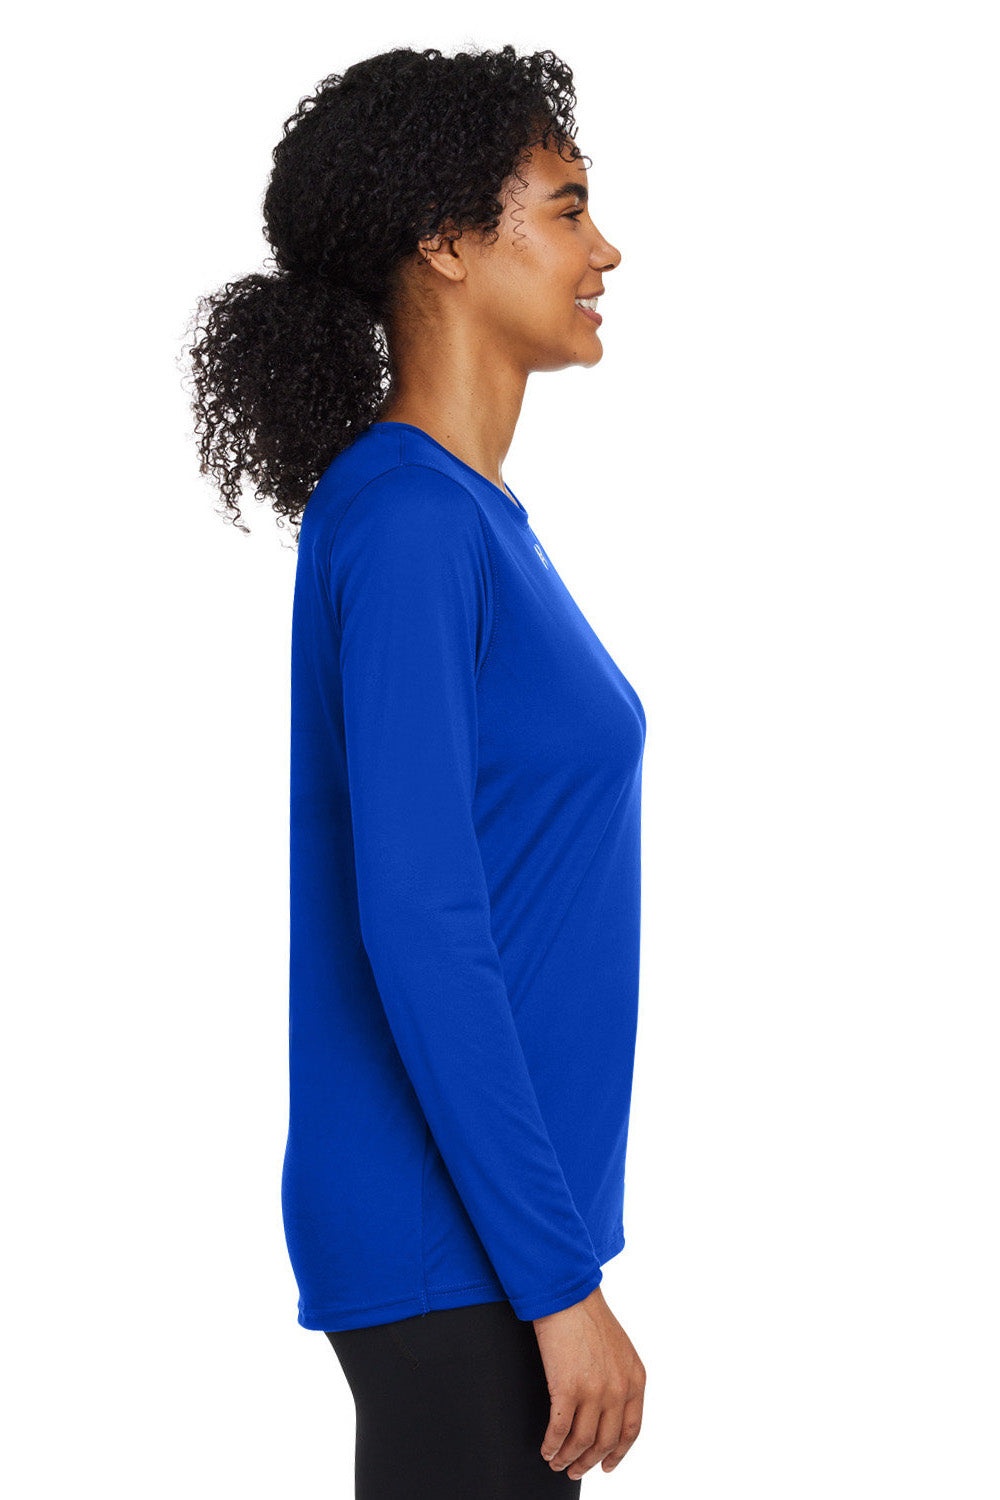 Under Armour 1376852 Womens Team Tech Moisture Wicking Long Sleeve Crewneck T-Shirt Royal Blue Model Side